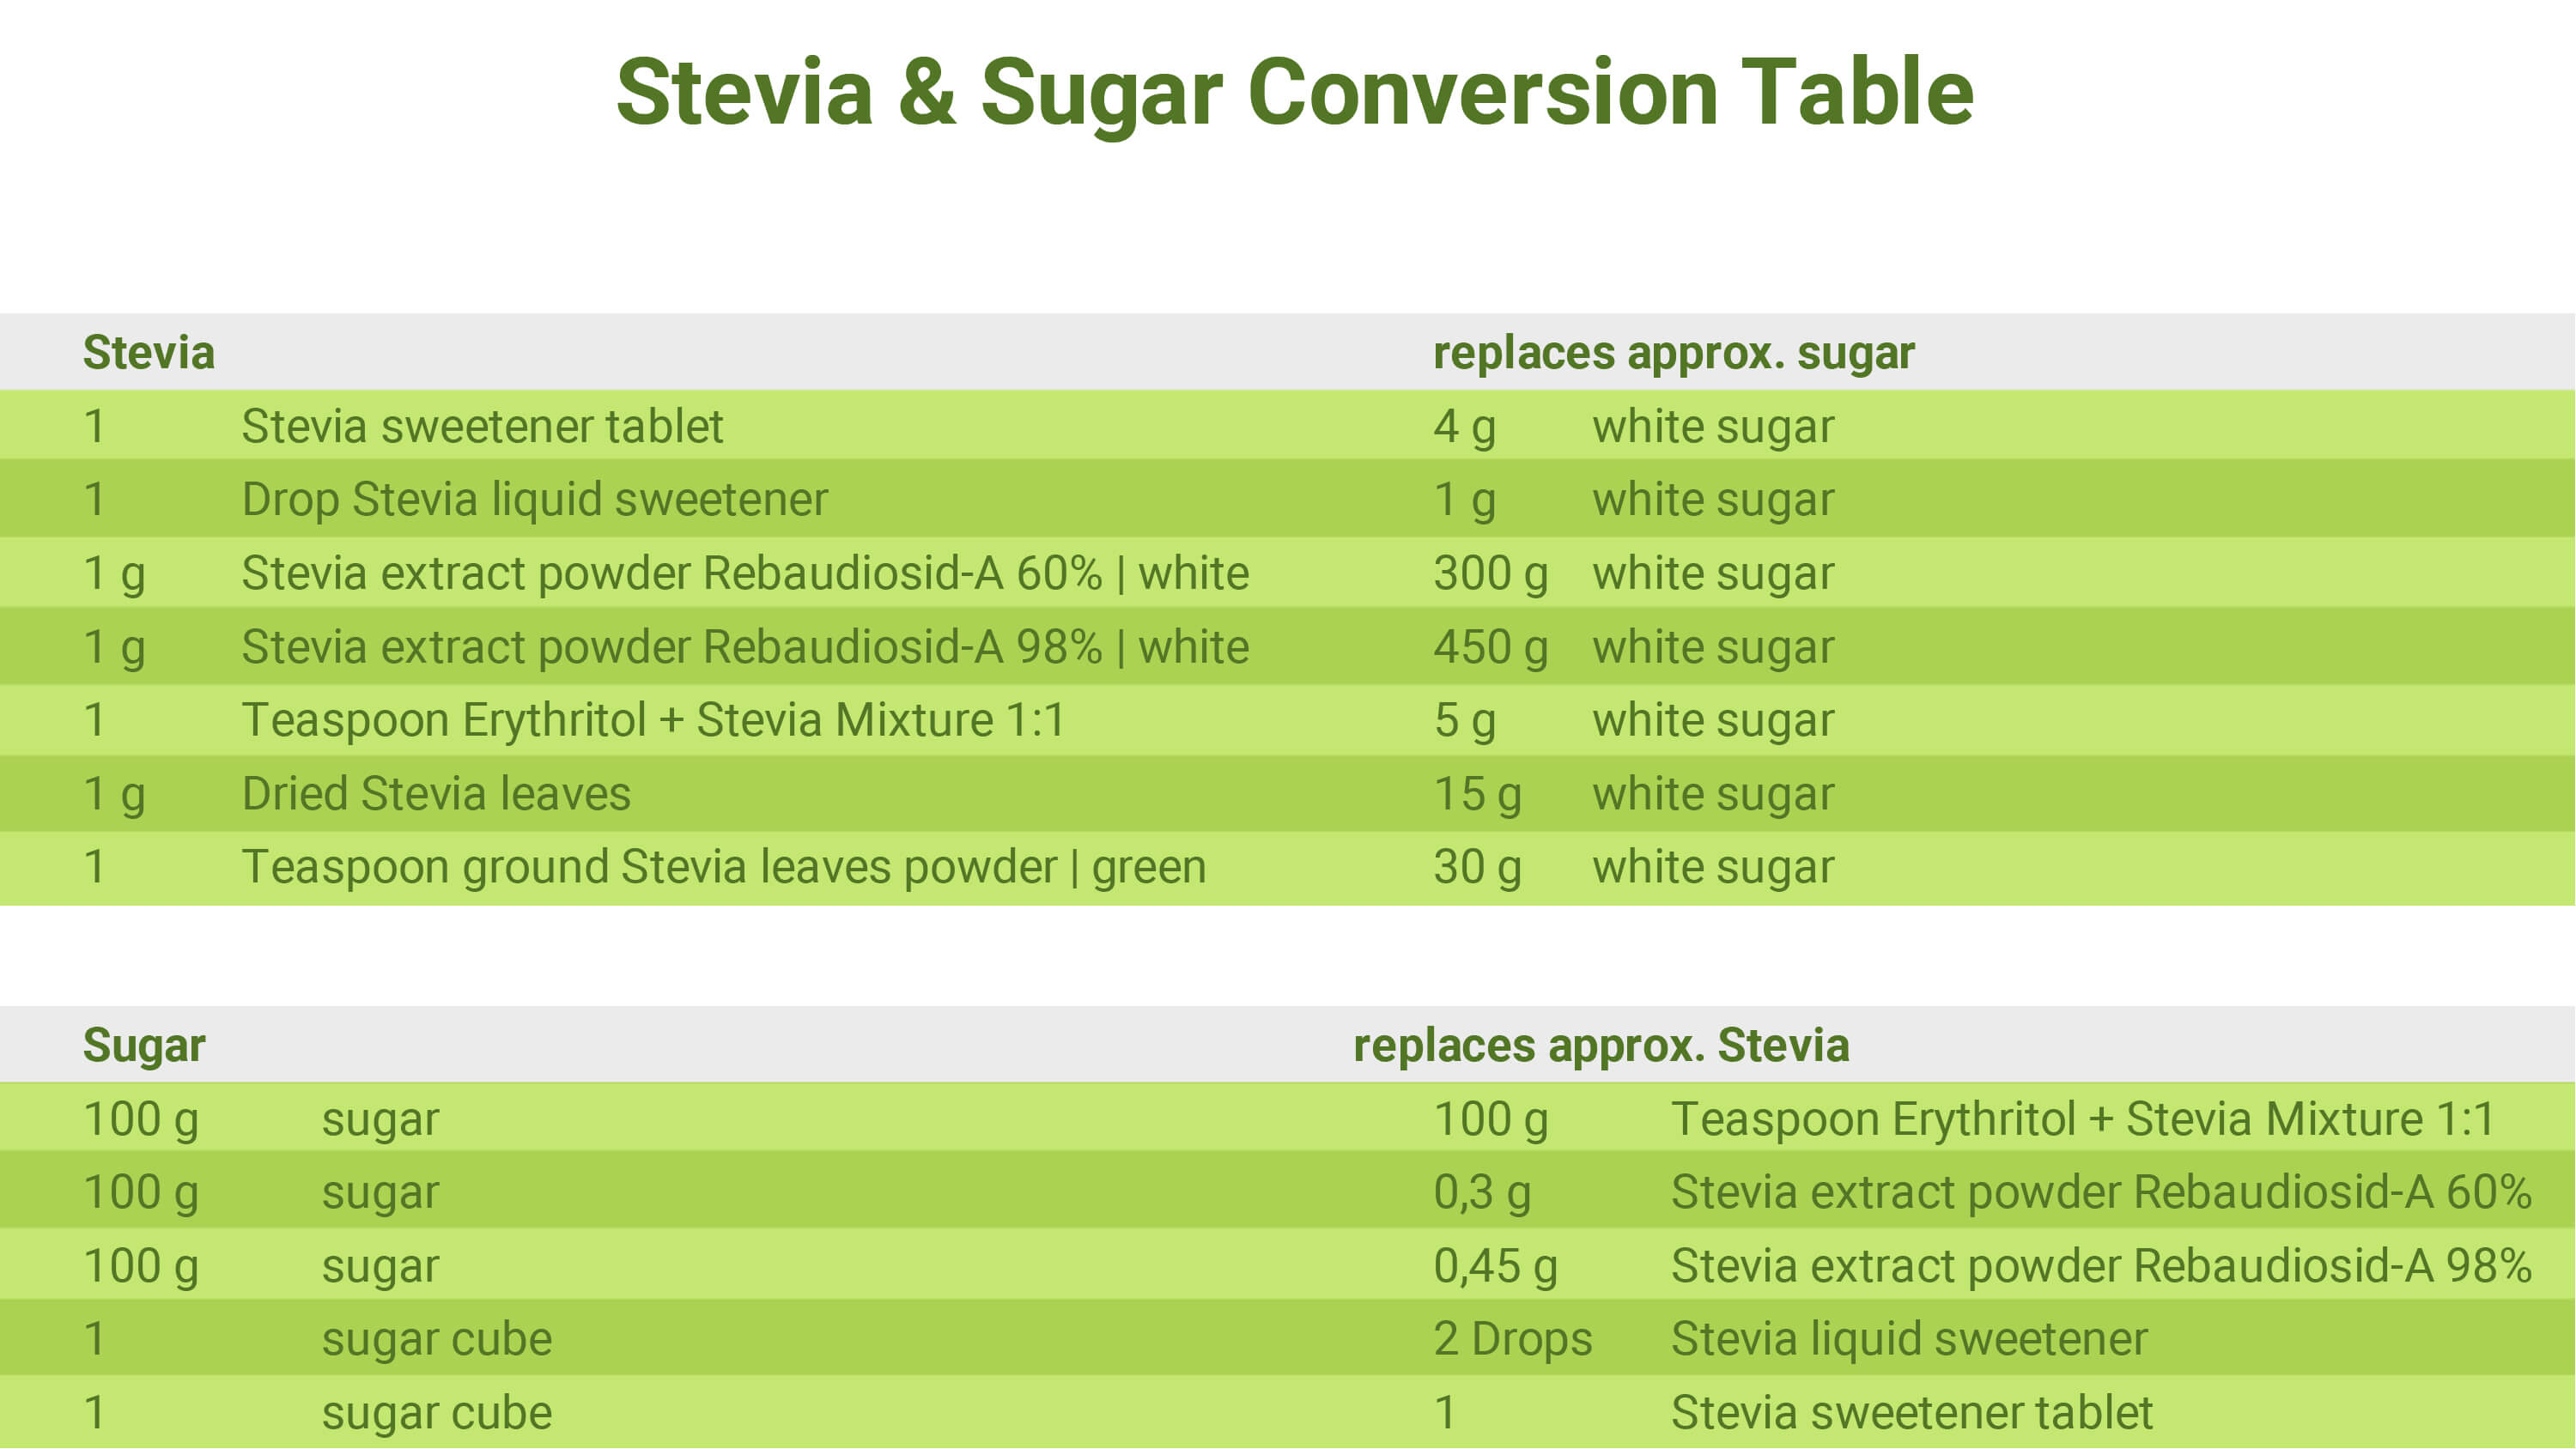 Sugar-Stevia conversion table for the correct dosage of Stevia